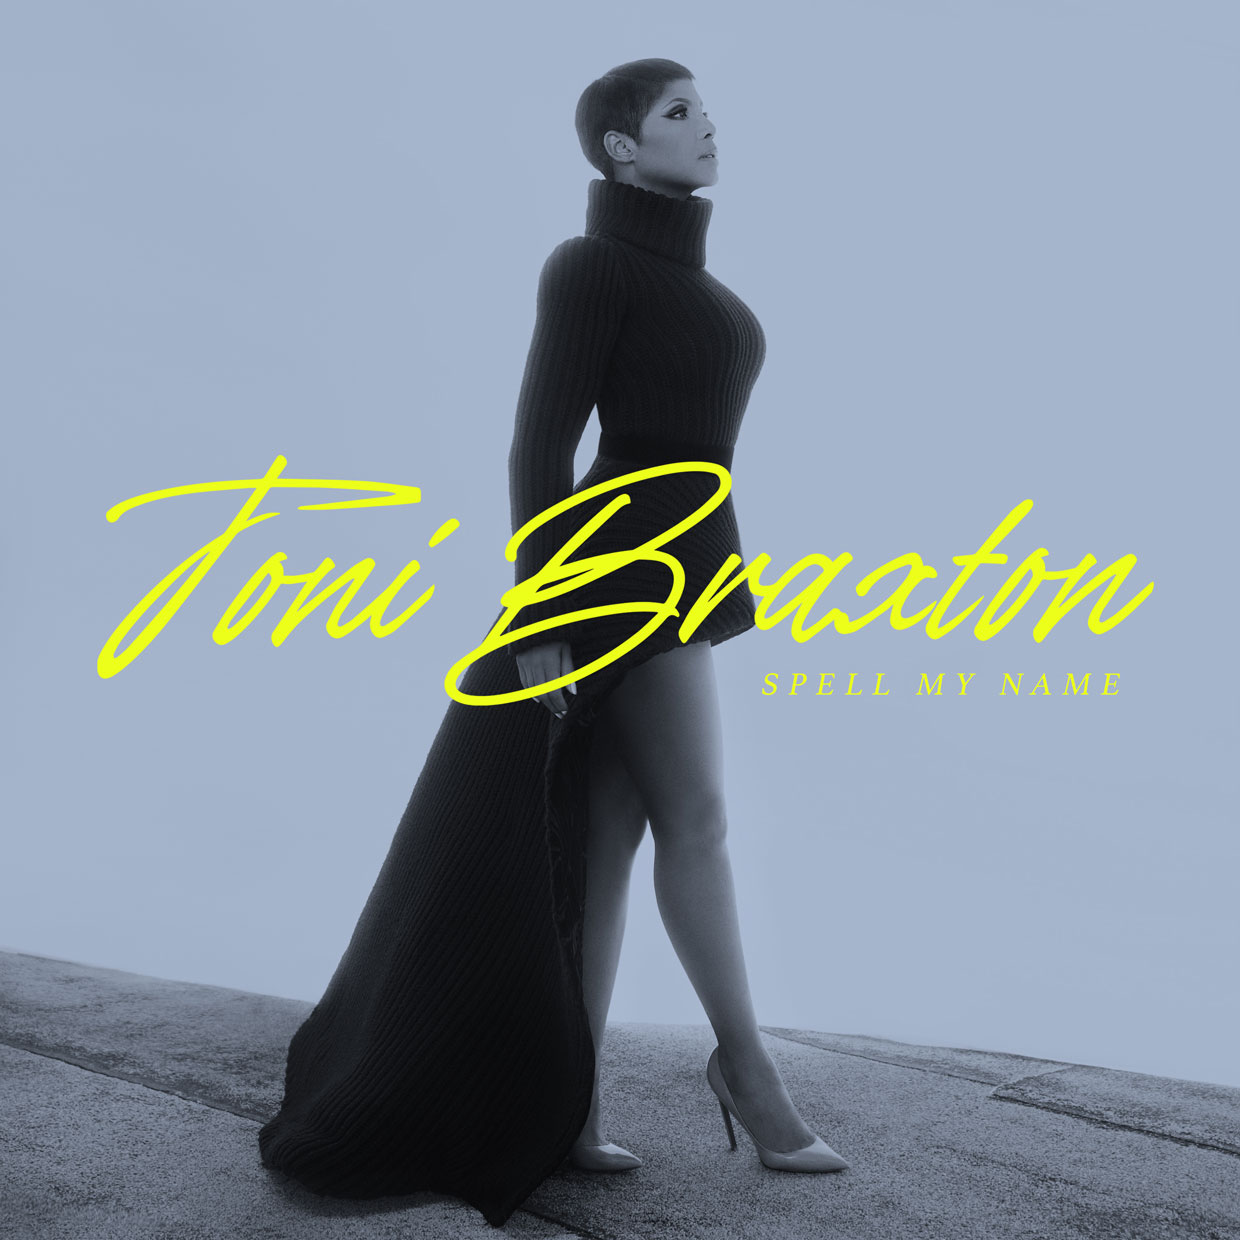 Toni Braxton Releases Tenth Studio Album "Spell My Name" (Stream)